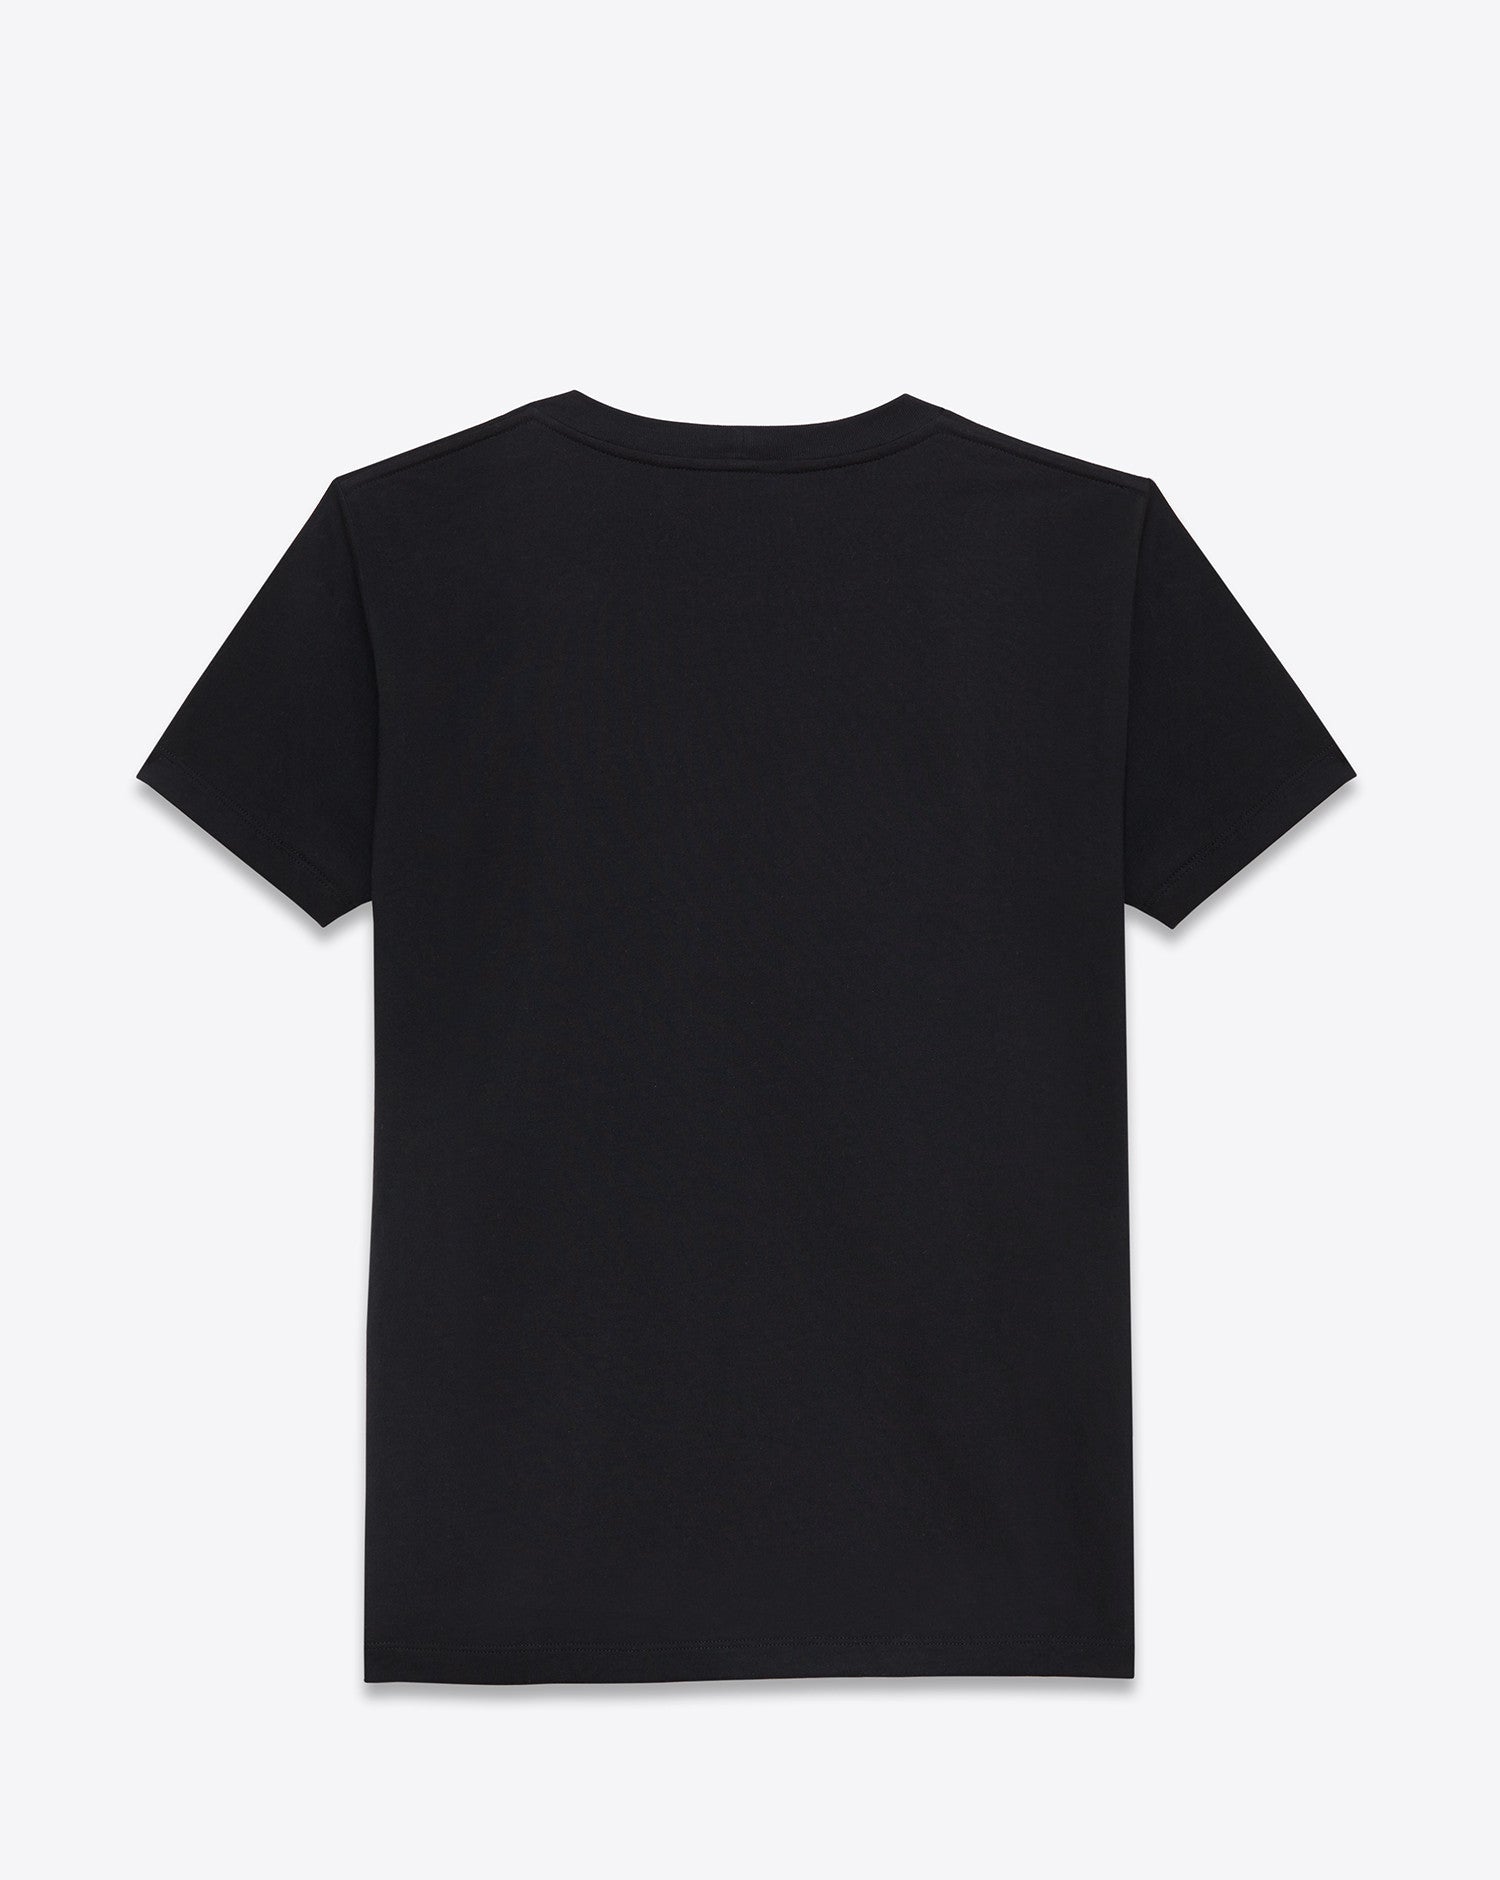 Wavy T-Shirt Black - DEMEANOIR - 1